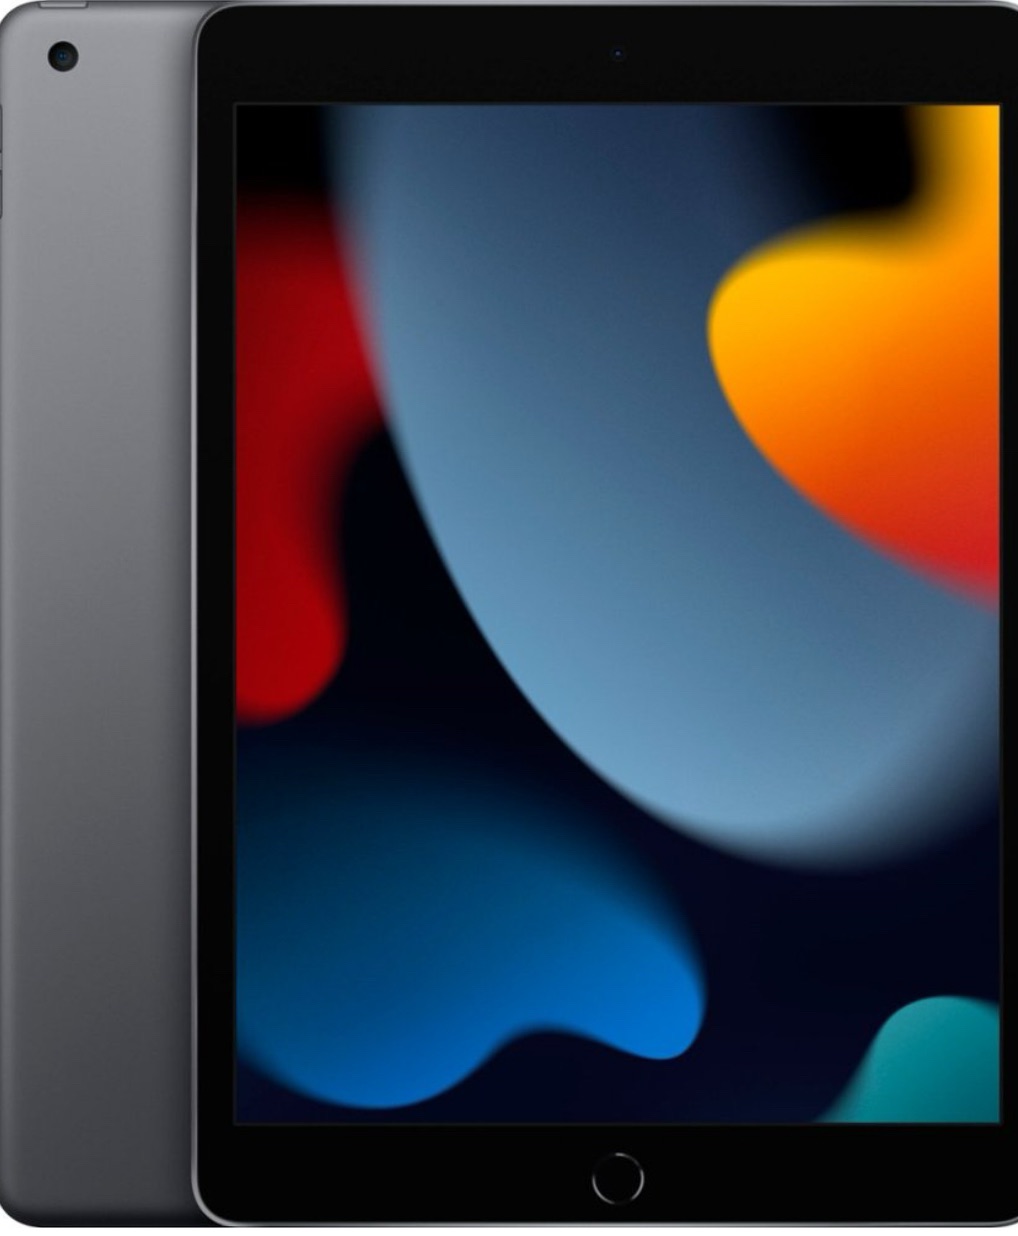 Apple - 10.2-Inch iPad (9th
Generation) with Wi-Fi